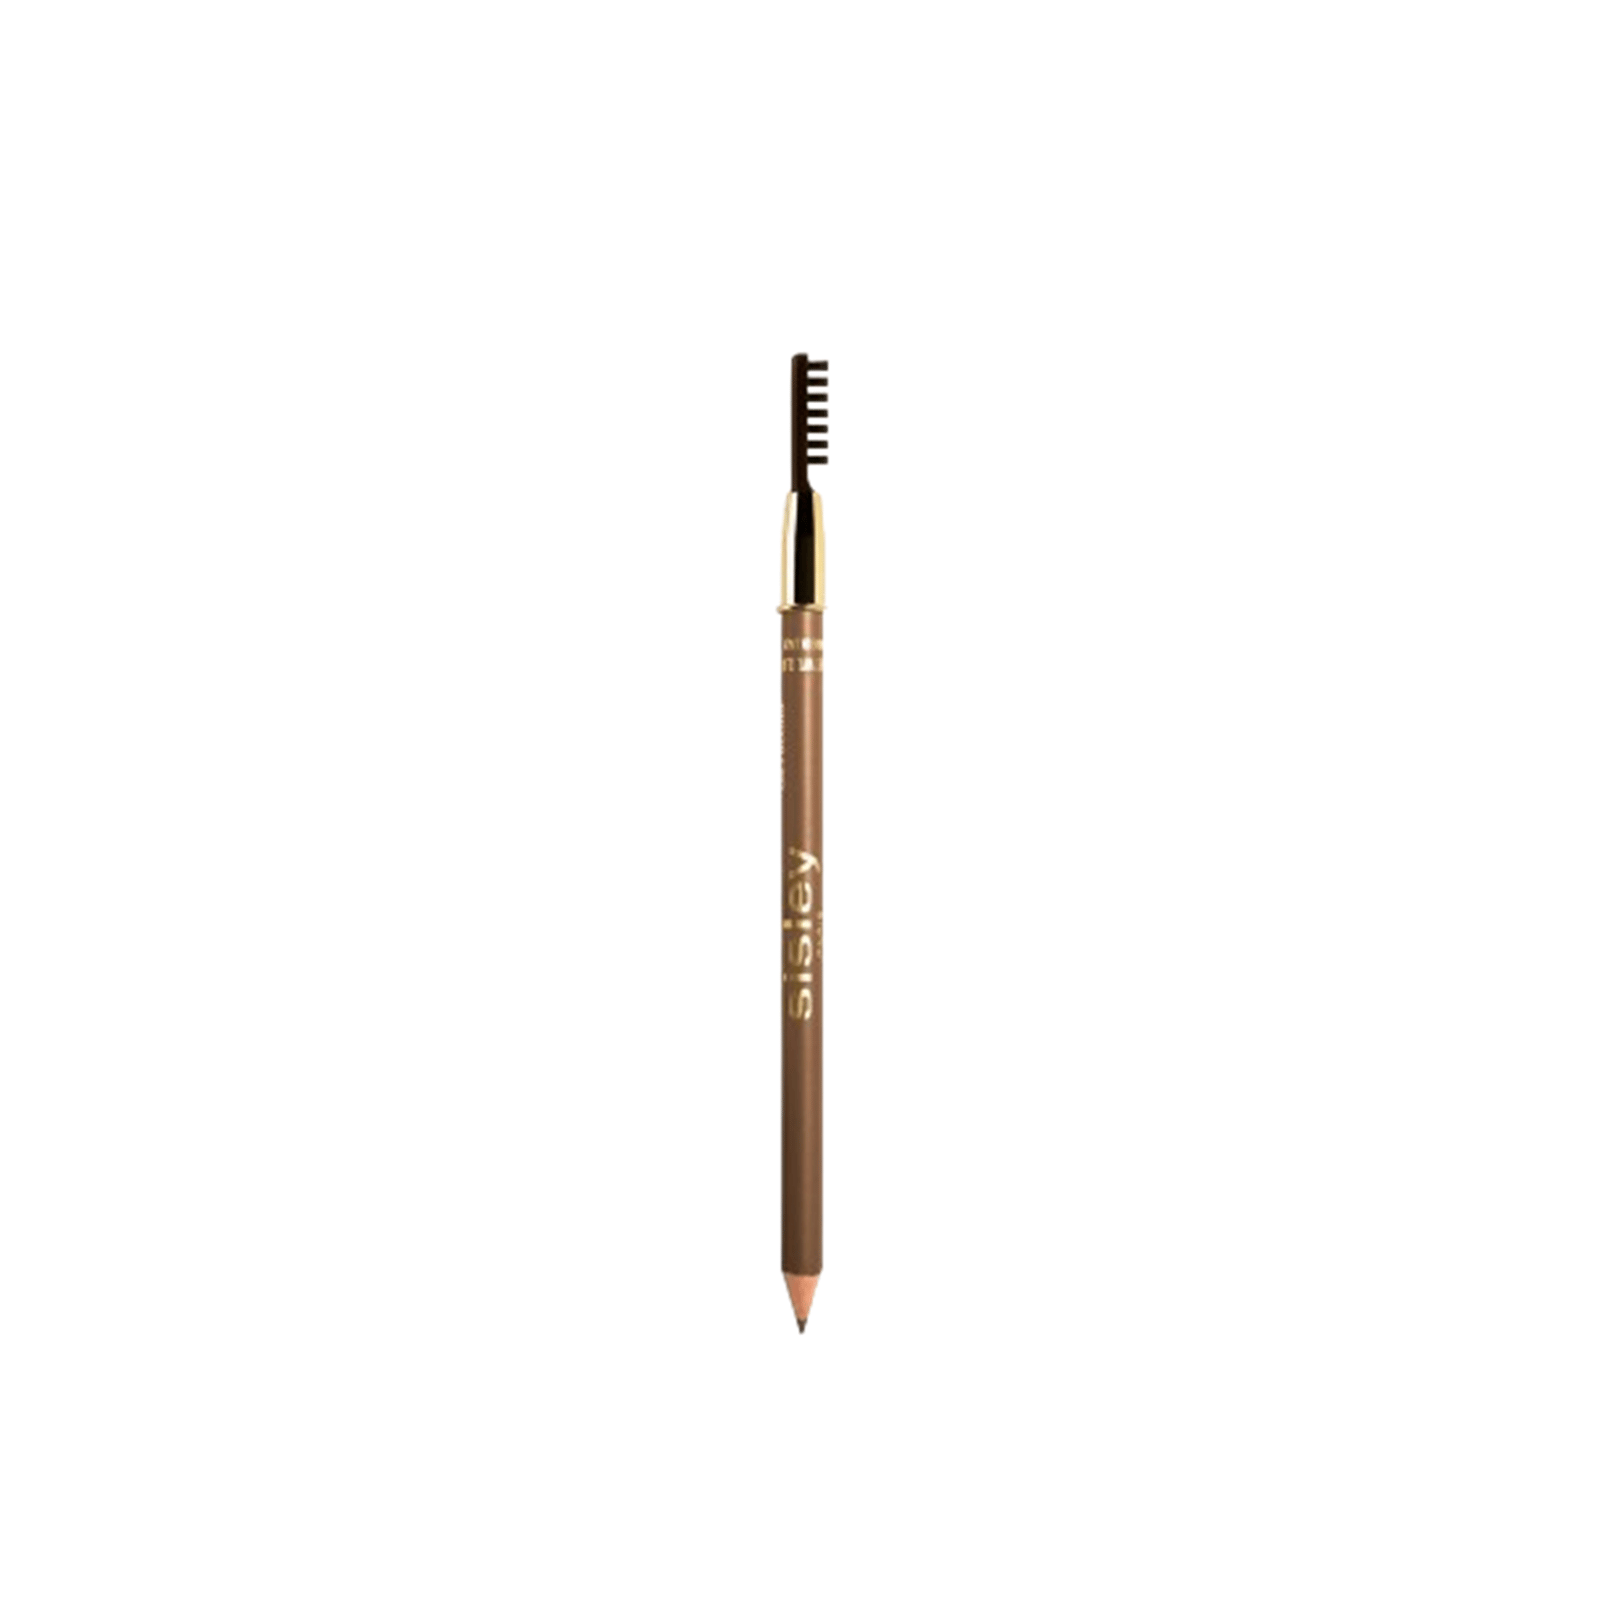 Sisley Paris Phyto Sourcils Perfect Eyeliner Pencil 4 Cappuccino 0.55g (0.019 oz)